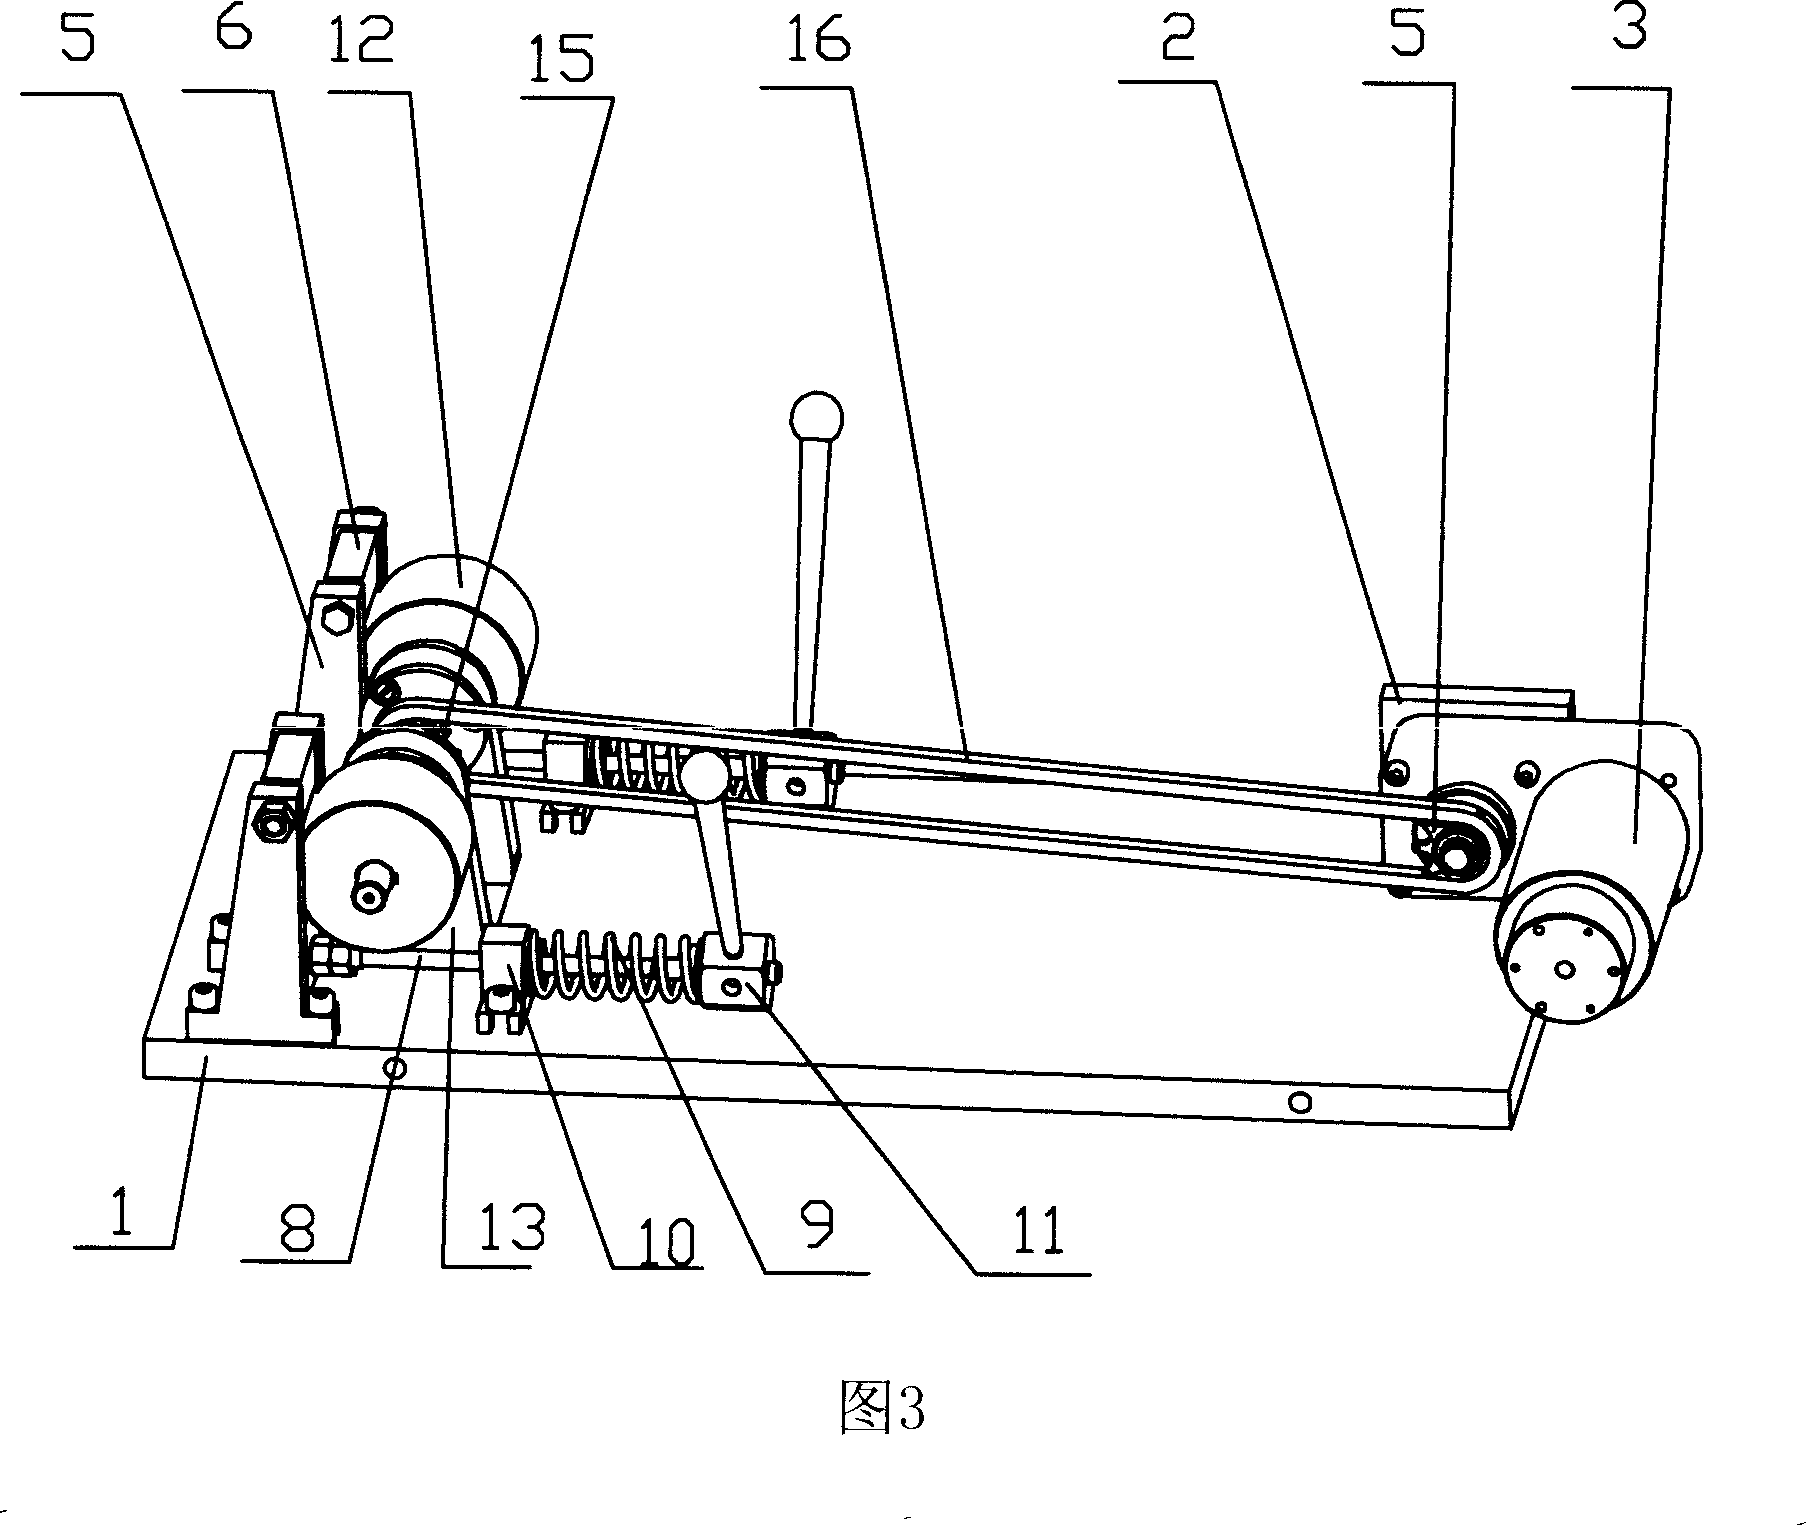 Electric machine load simulate mechanism